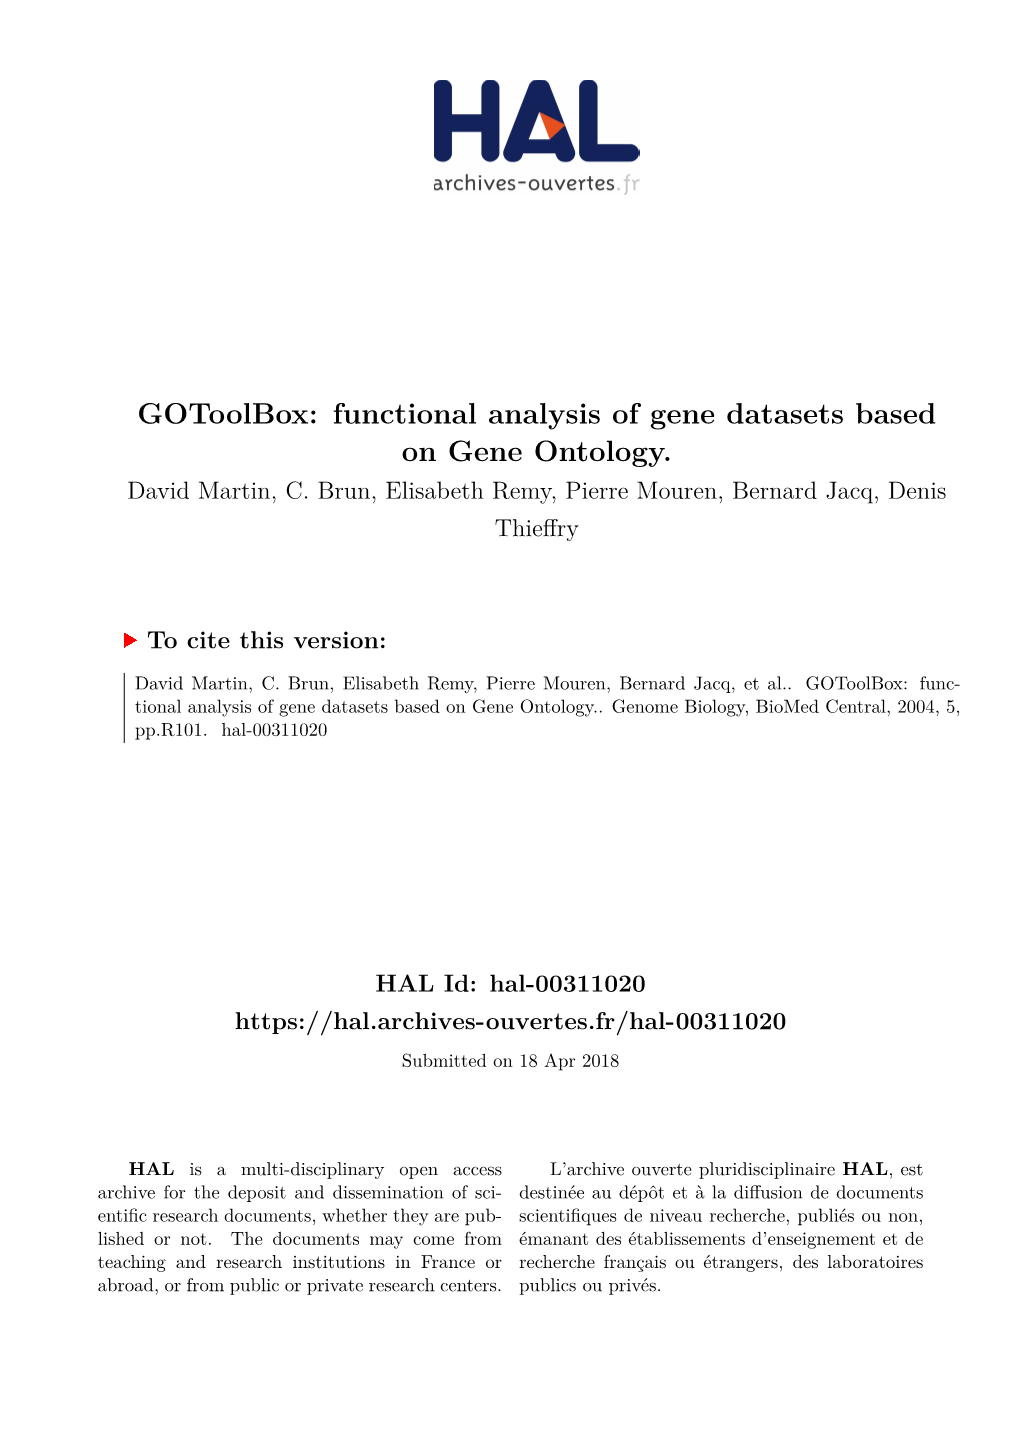 Functional Analysis of Gene Datasets Based on Gene Ontology. David Martin, C